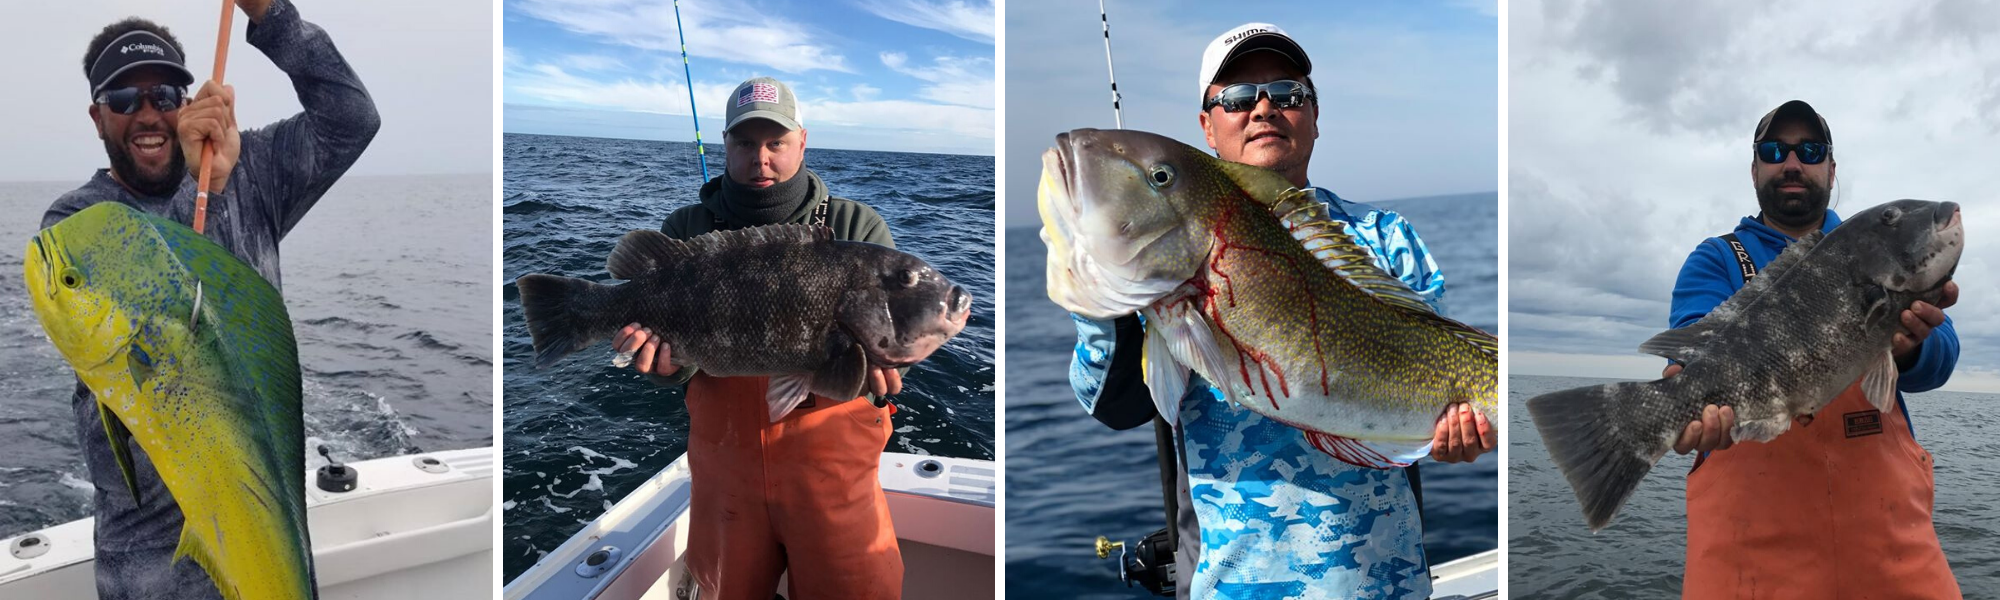 Ocean City Maryland Fishig Reports. Fish Bound Charters - Tog Fishing Reports, Flounder Fishing Reports, Sea Bass Fishing Reports